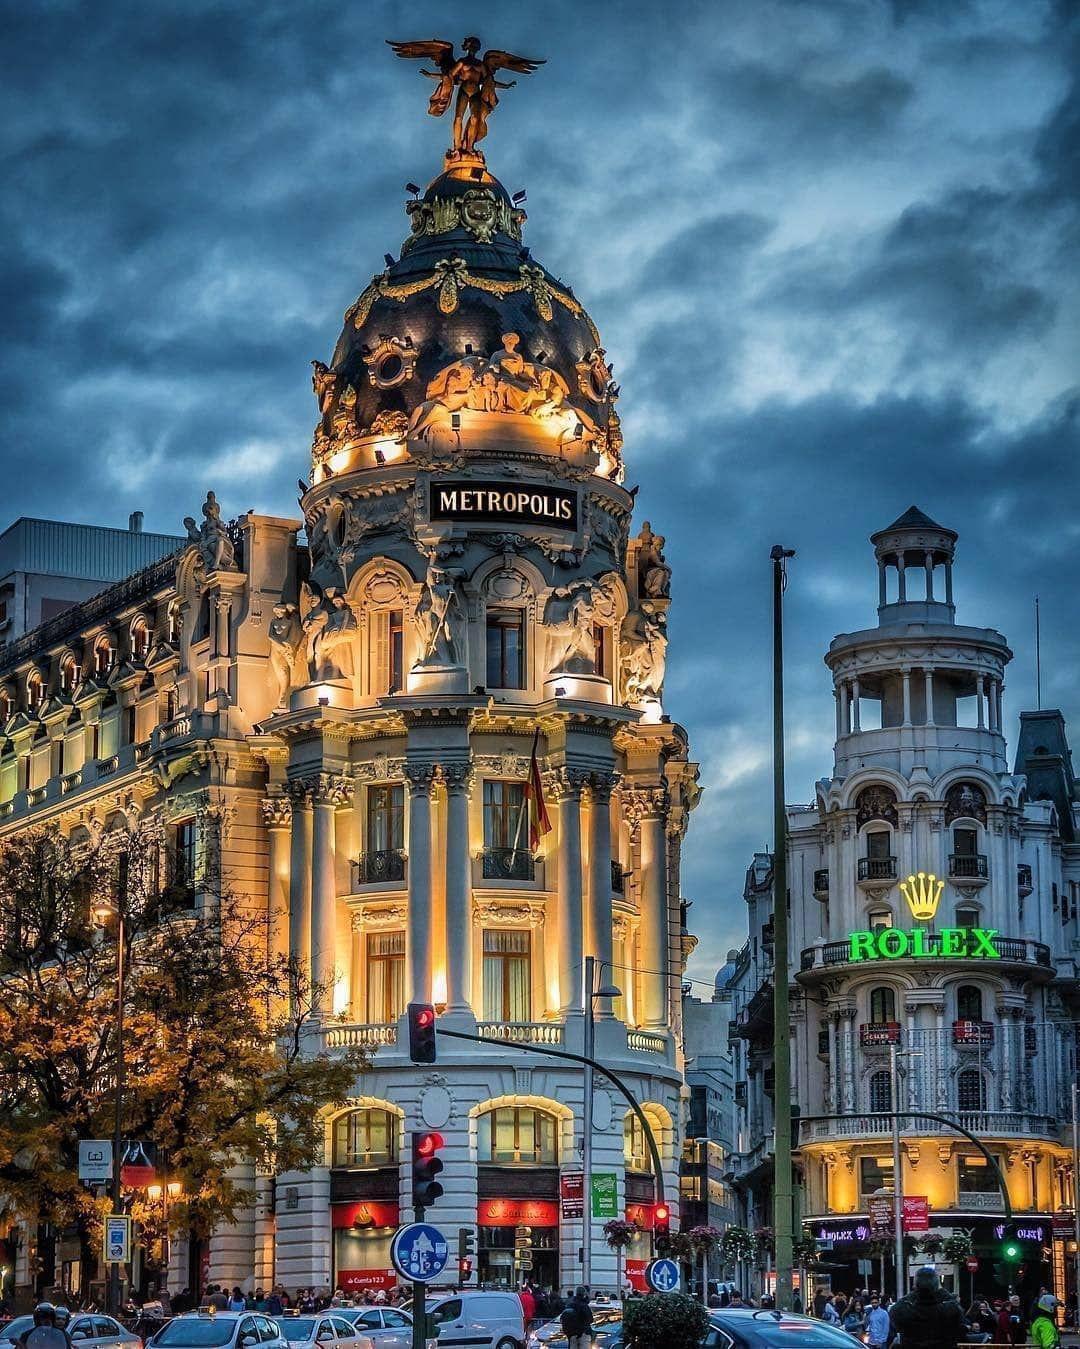 The Madrid Metropolis